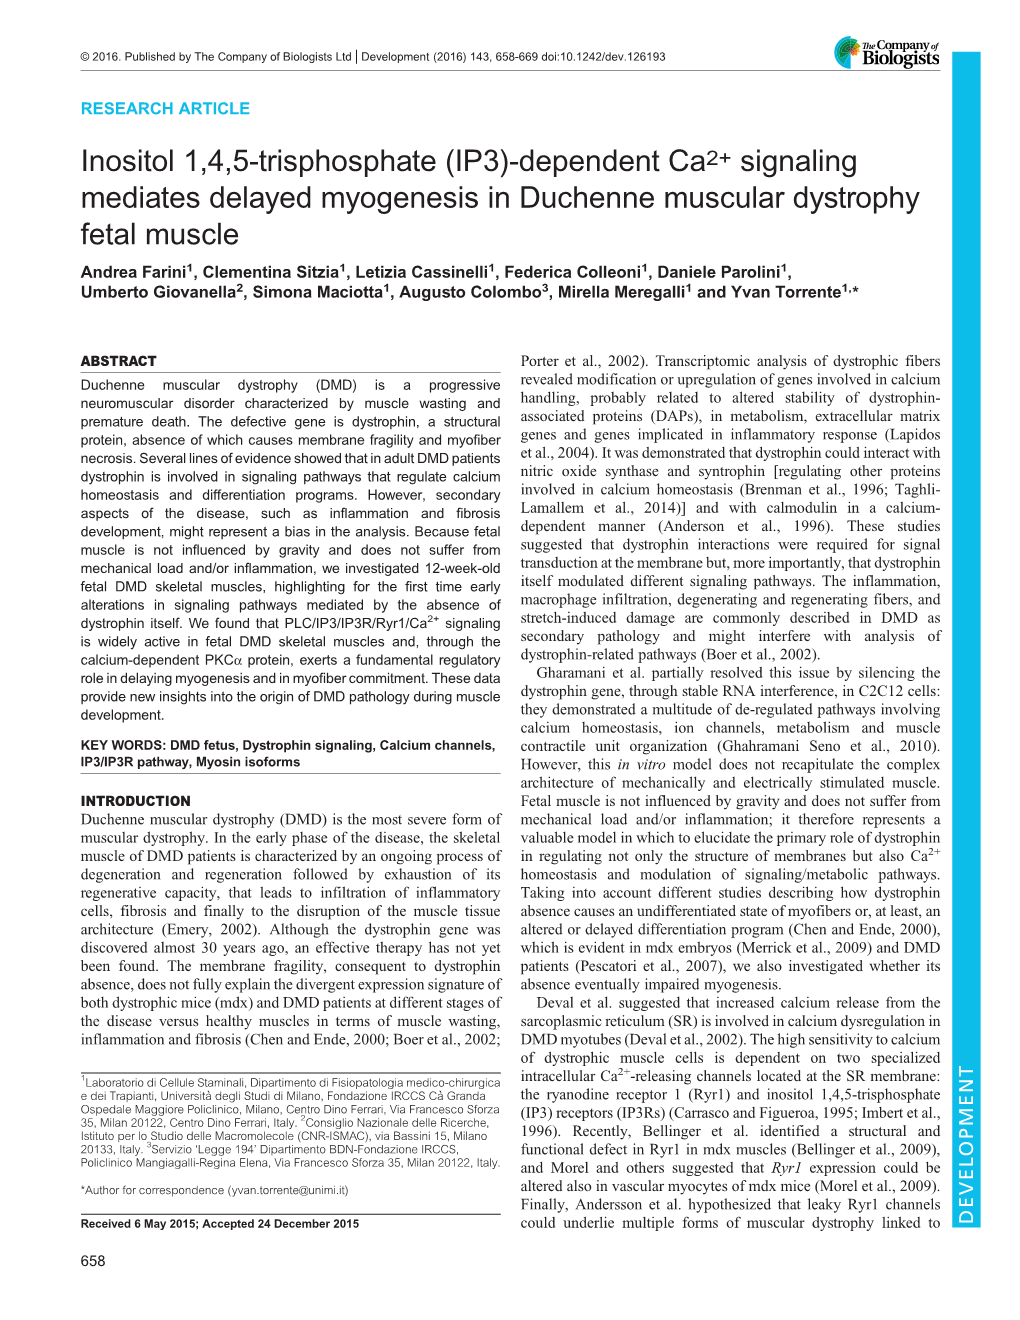 (IP3)-Dependent Ca2+ Signaling Mediates Delayed Myogenesis In